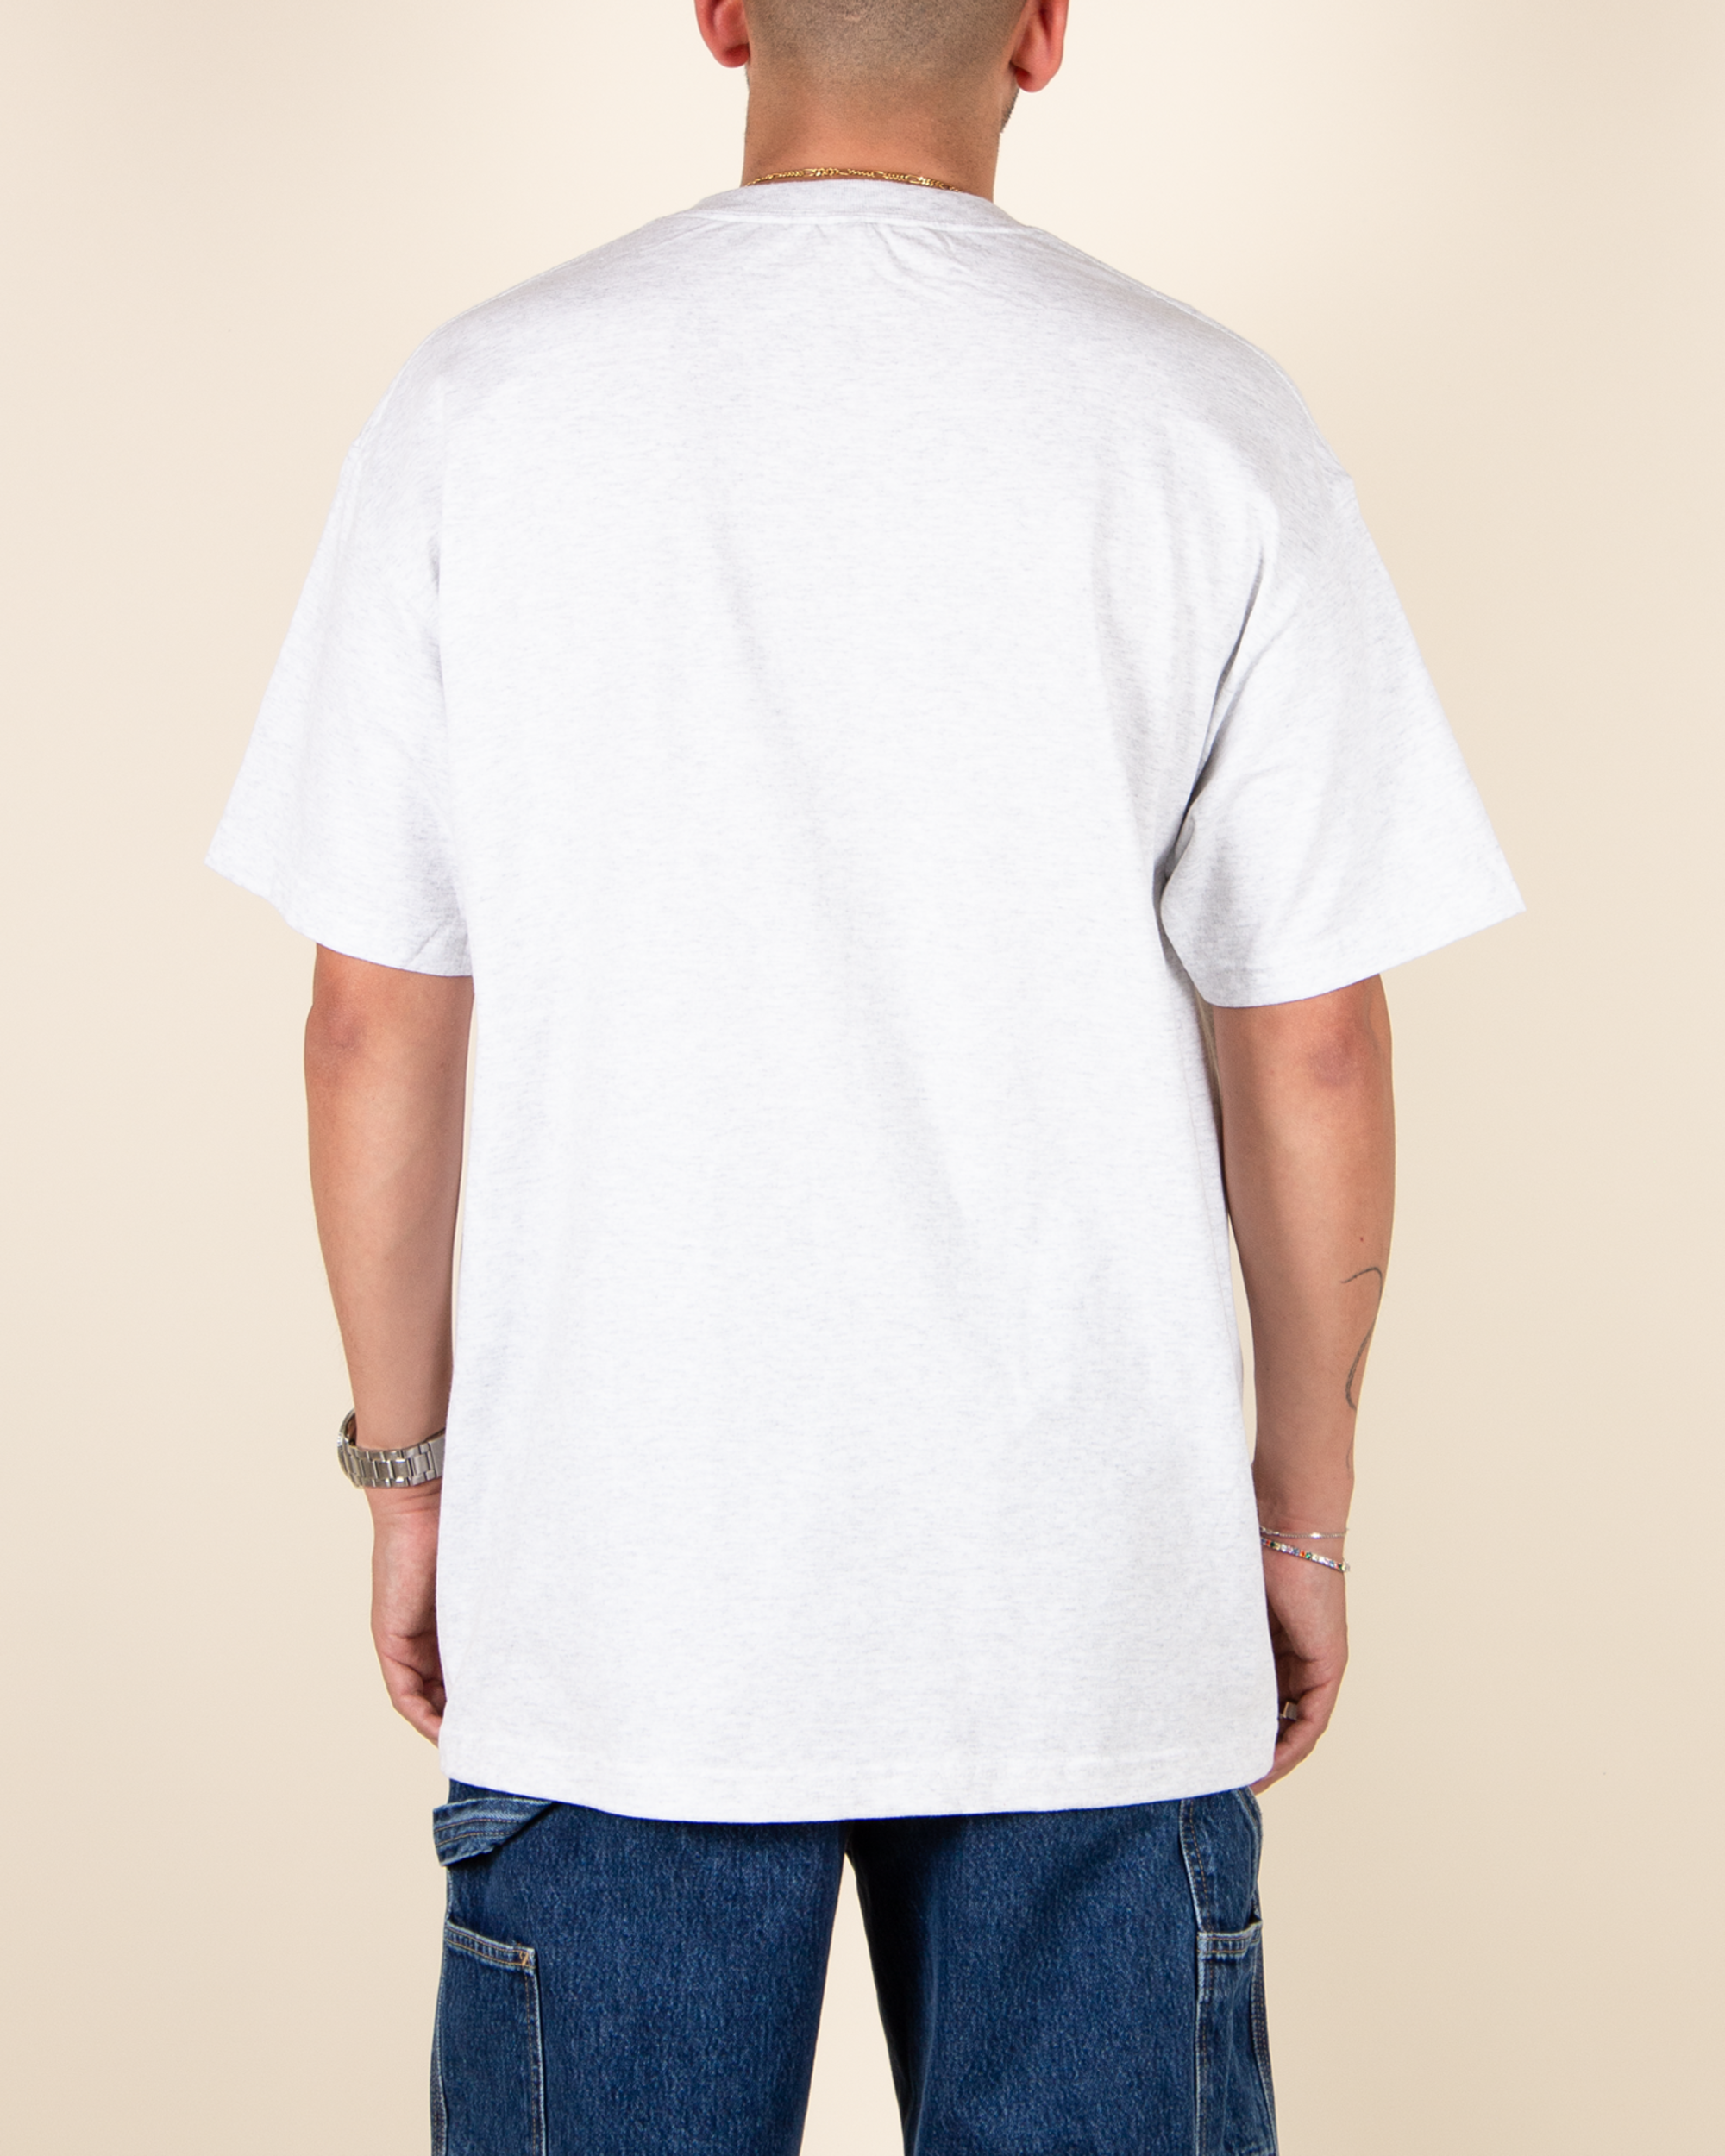 Lockwood Baseball T-shirt - Grey Melange